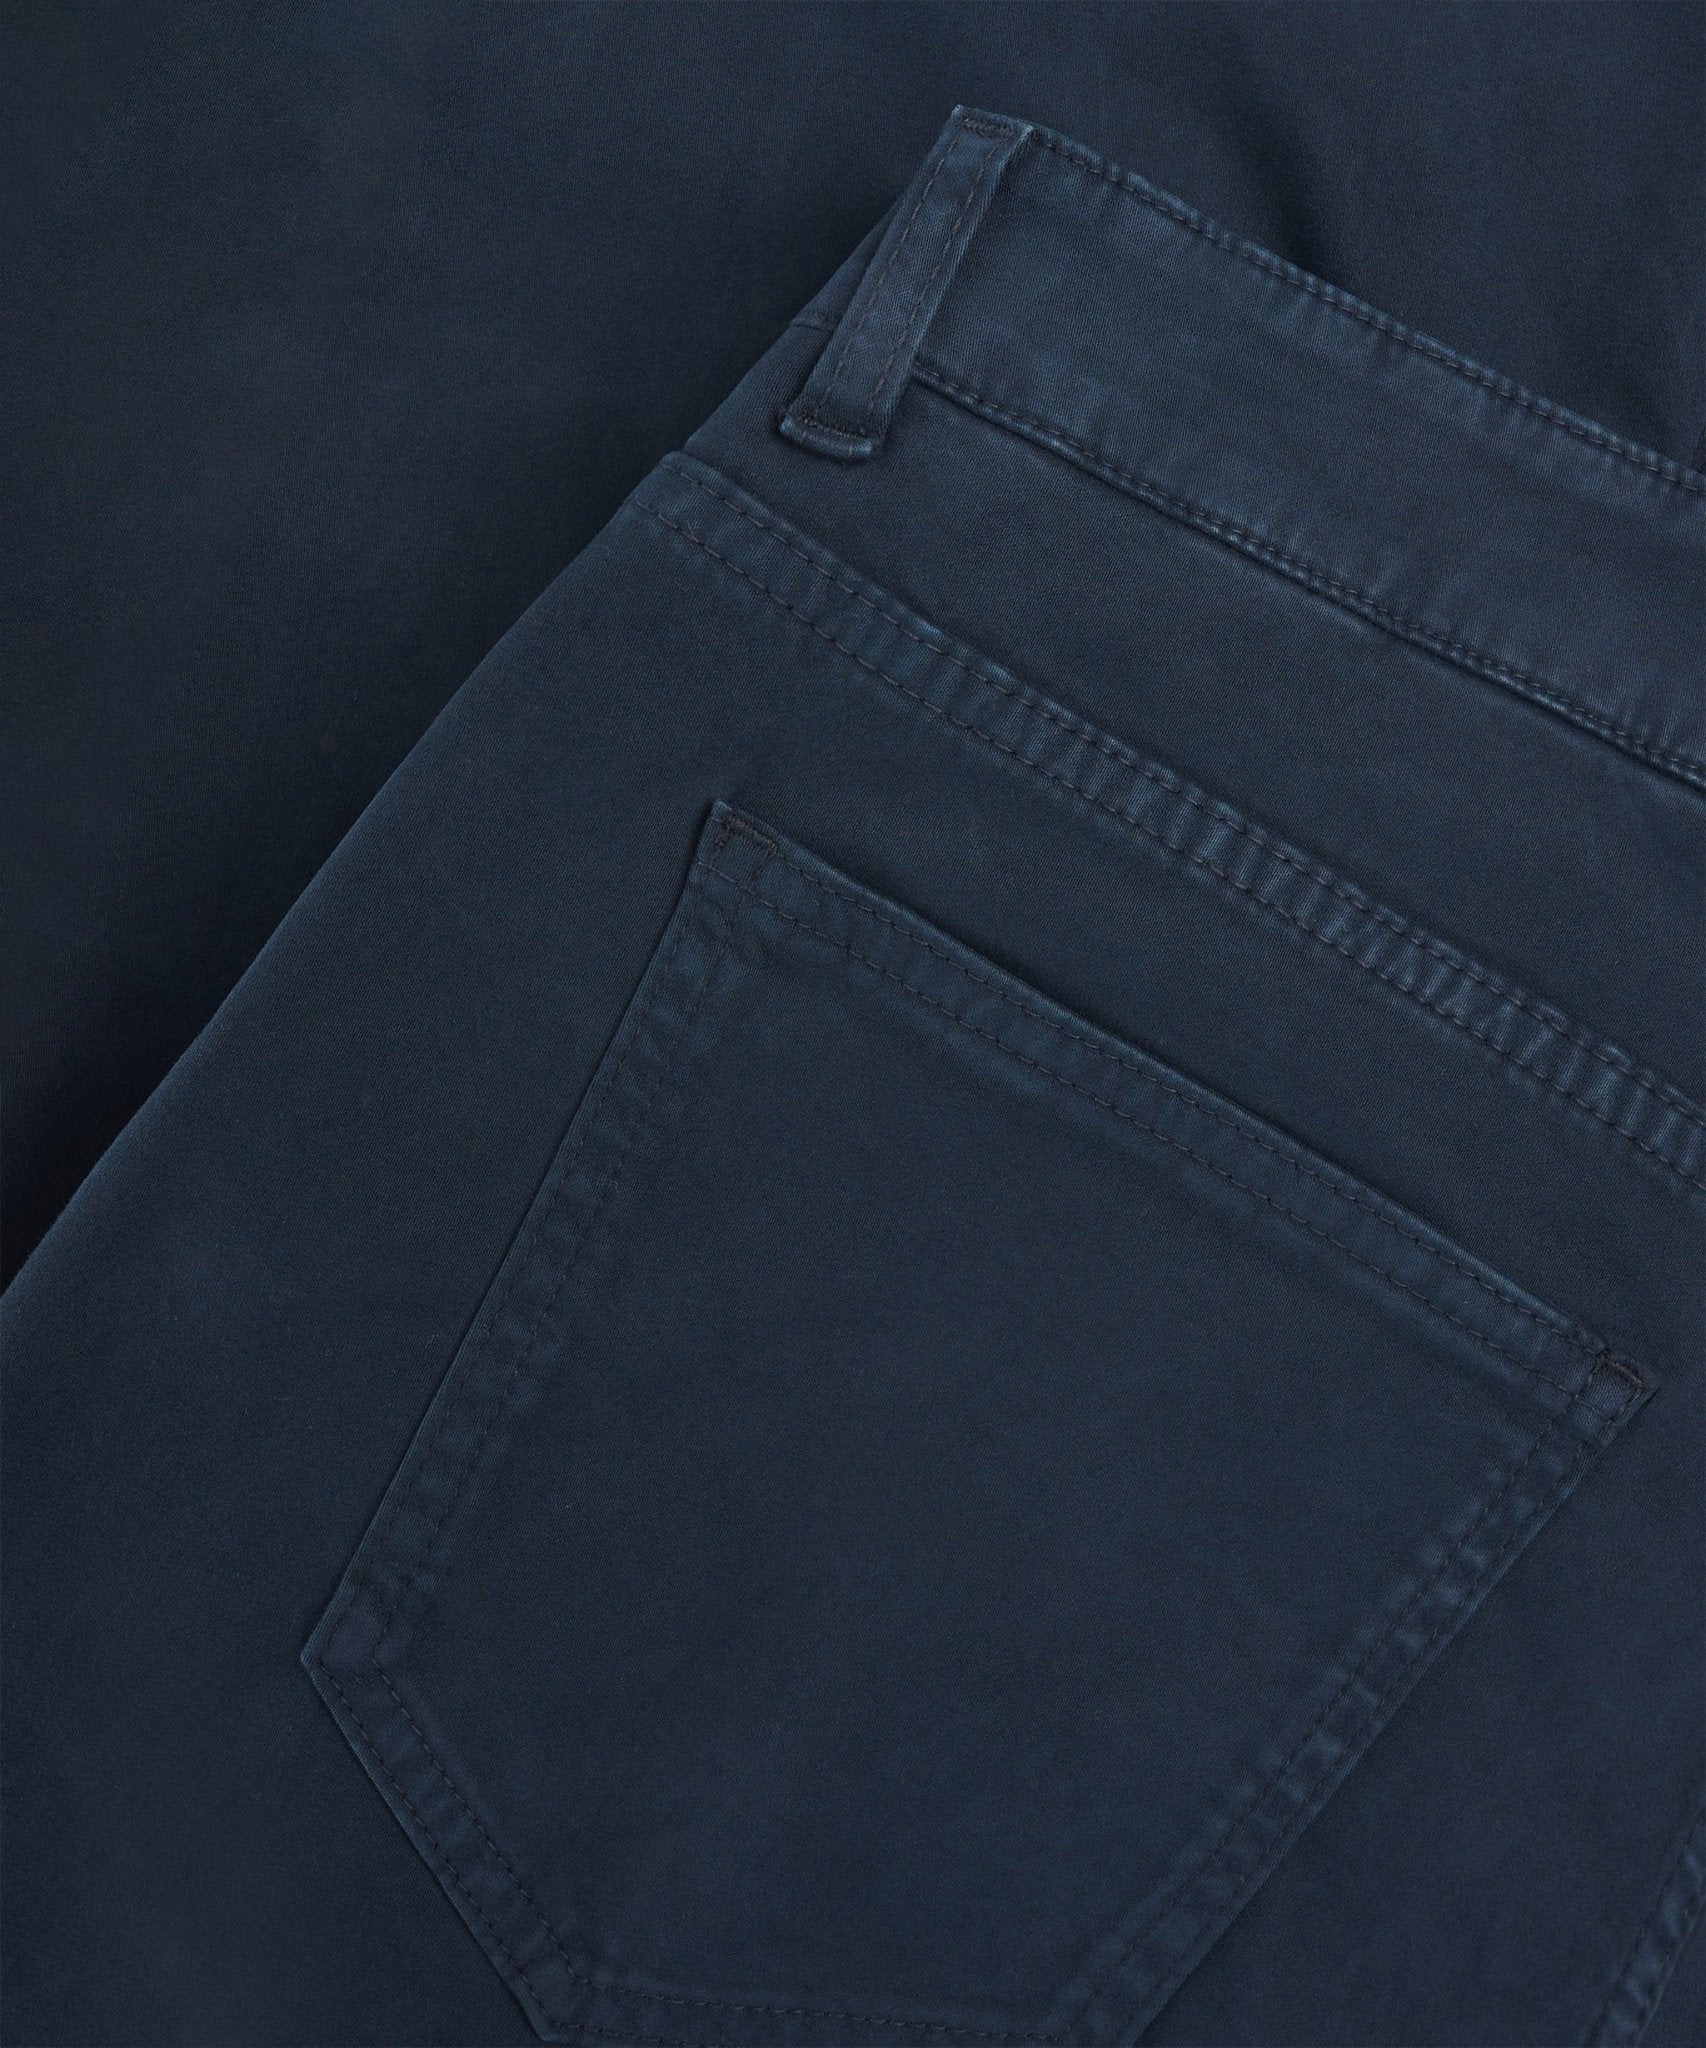 SOCI3TY 5-pocket broek garment dye katoen donkerblauw - The Society Shop